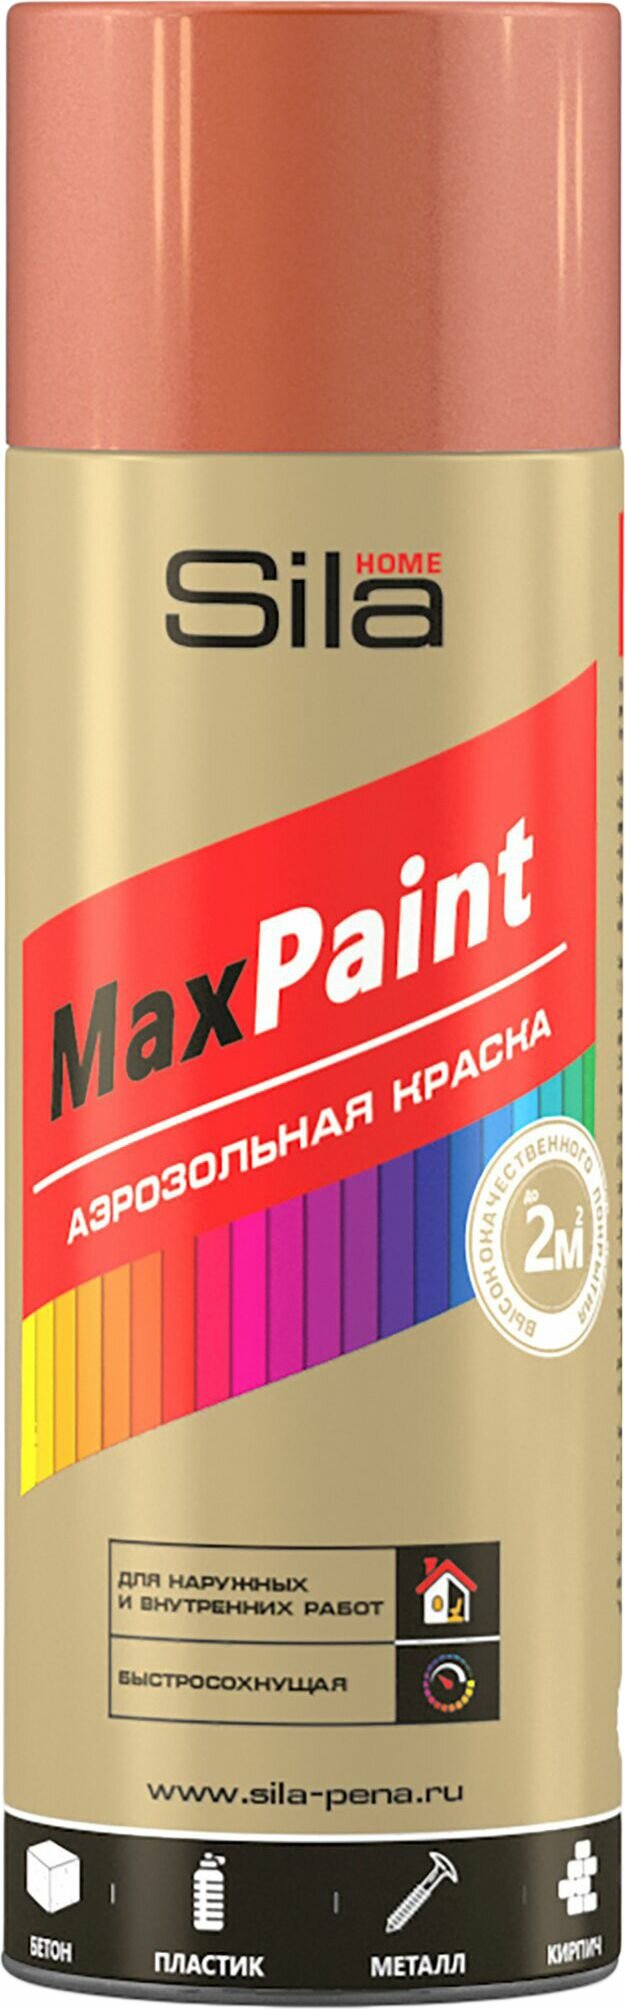   Sila Home MaxPaint     0,52 